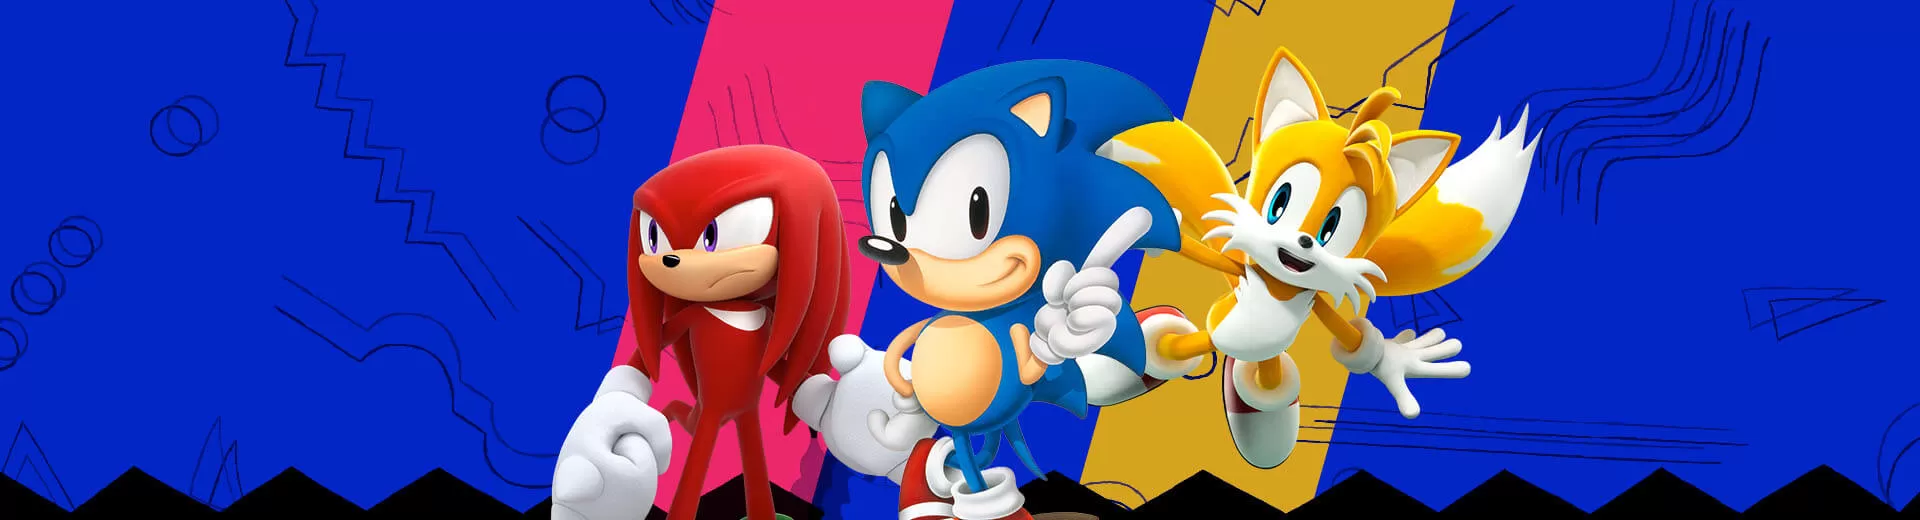 Sonic The Hedgehog Classic Emulator Pc